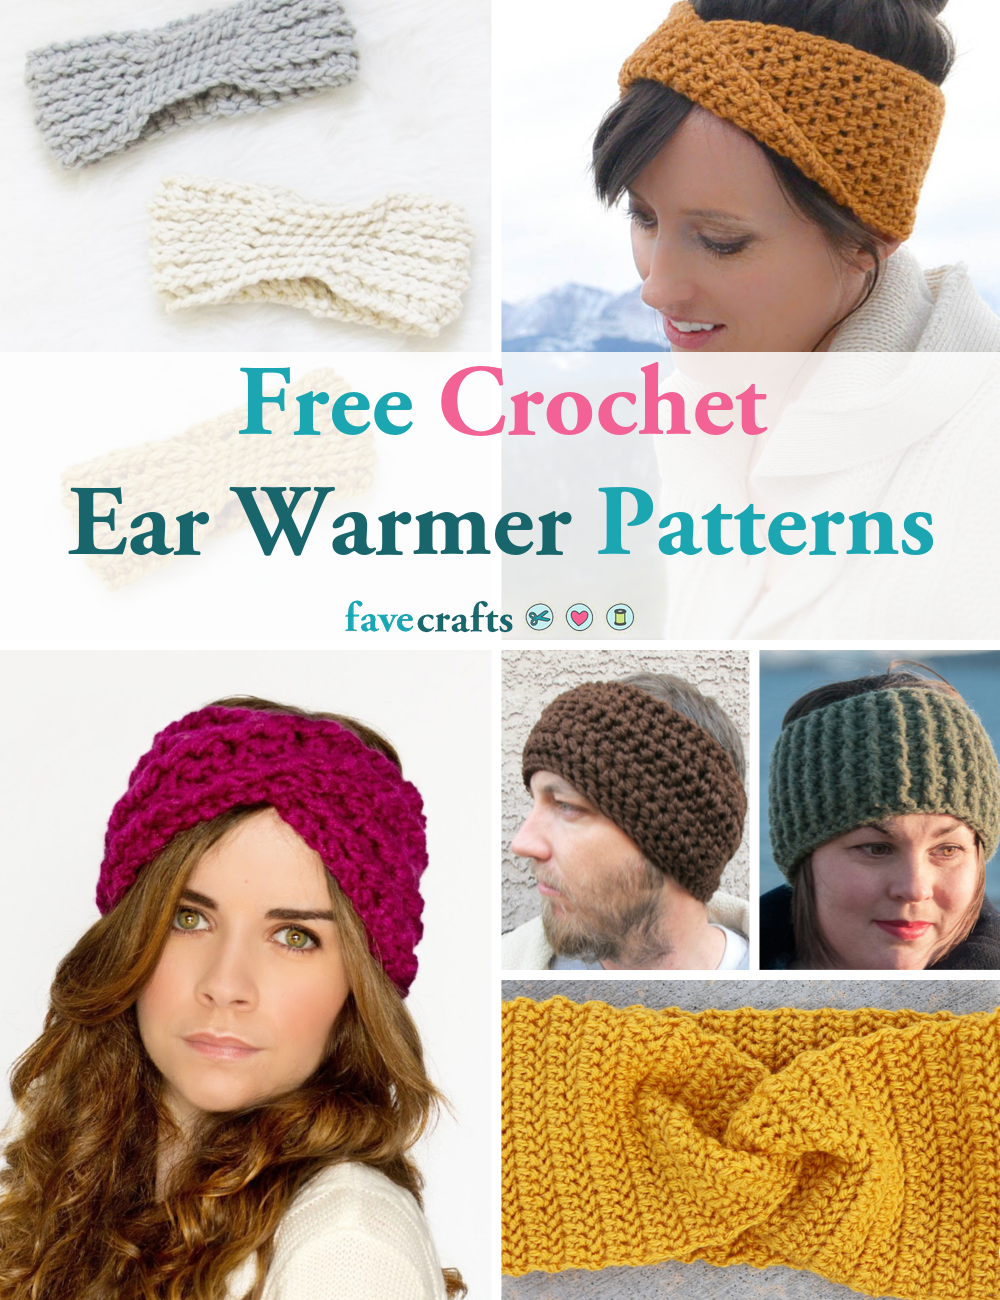 Christmas Gift Idea Handmade Winter Hat Size Medium Crocheted Headband Ear Warmer Stocking Stuffer Keep Ears Warm in Cold Weather